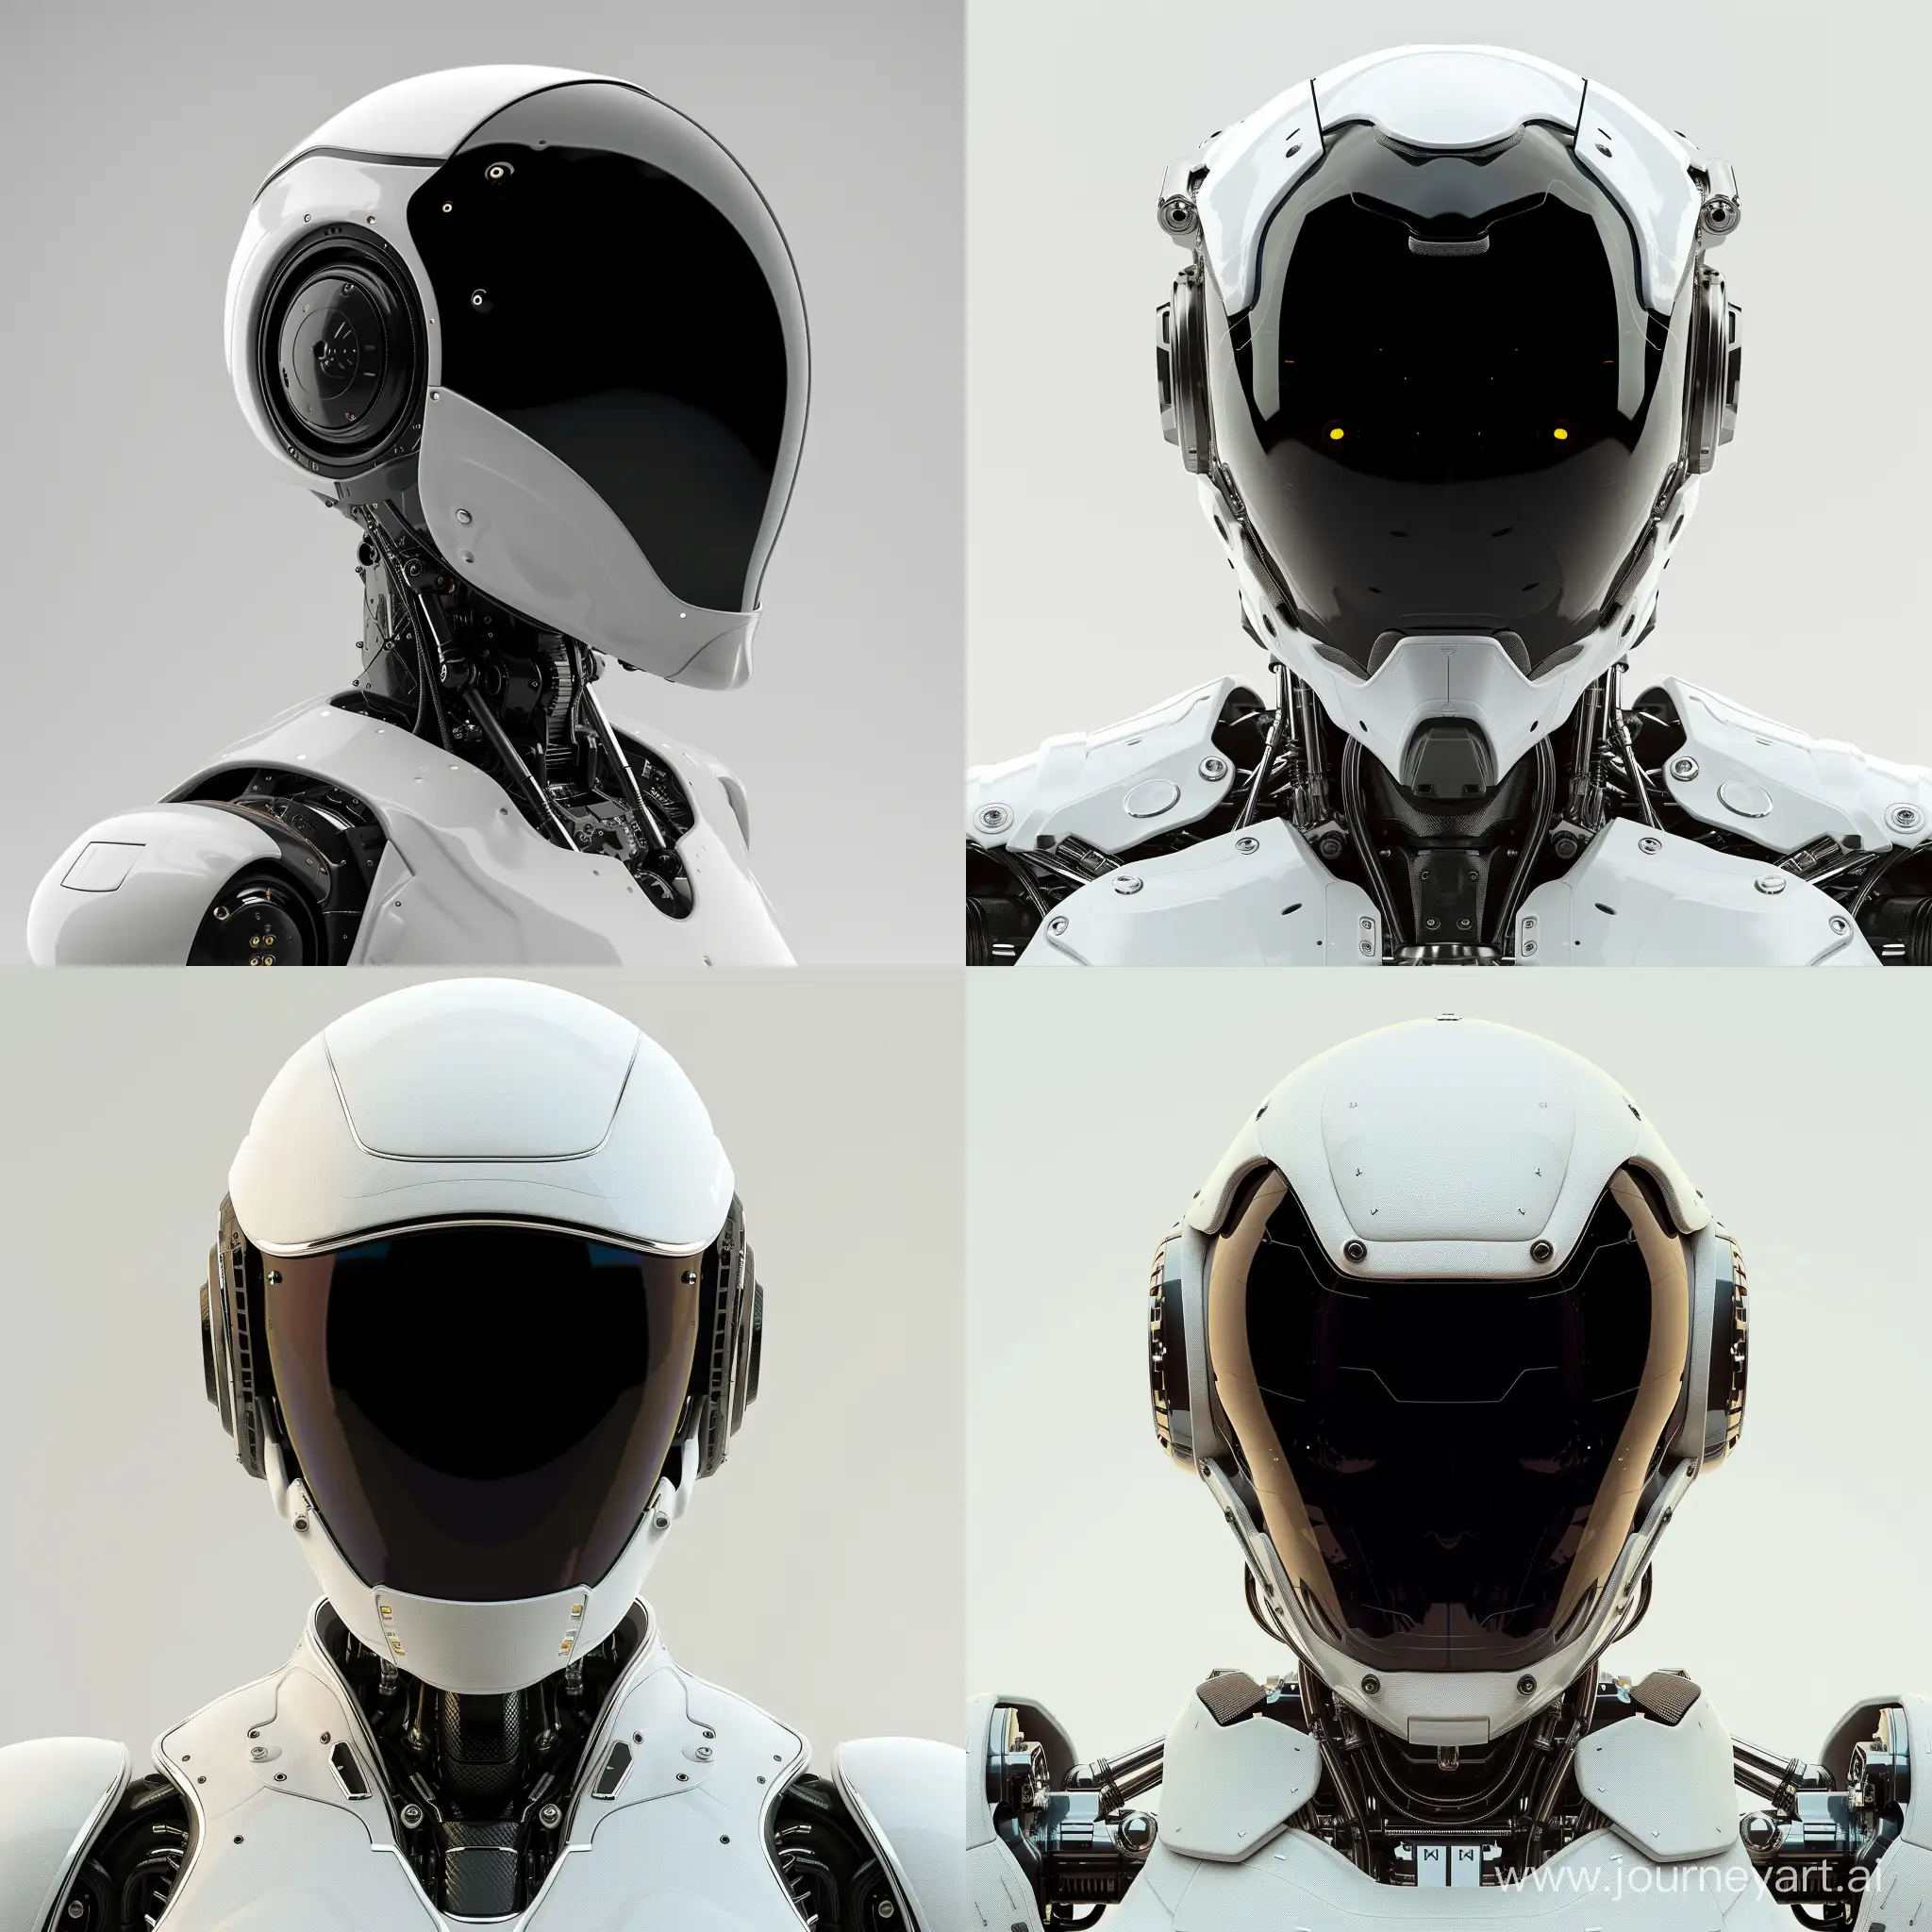 Futuristic-Industrial-Robot-Head-with-Dark-Glass-Visor